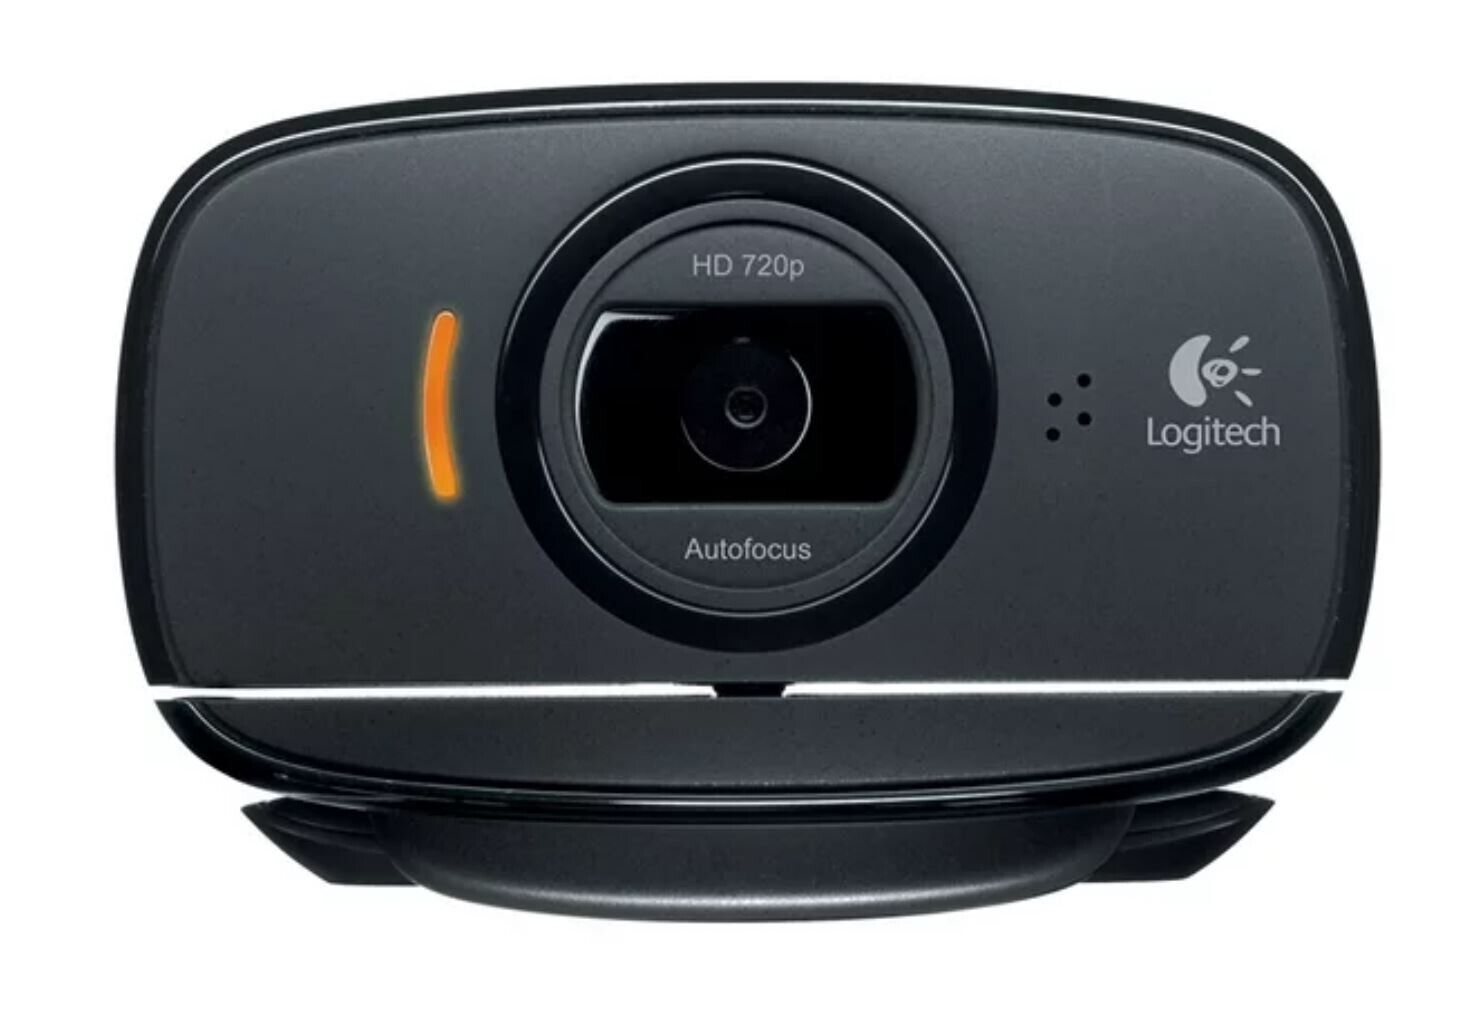 NEW SEALED IN BOX - Logitech C525 HD Webcam USB Autofocus 720P Photo Video w/Mic